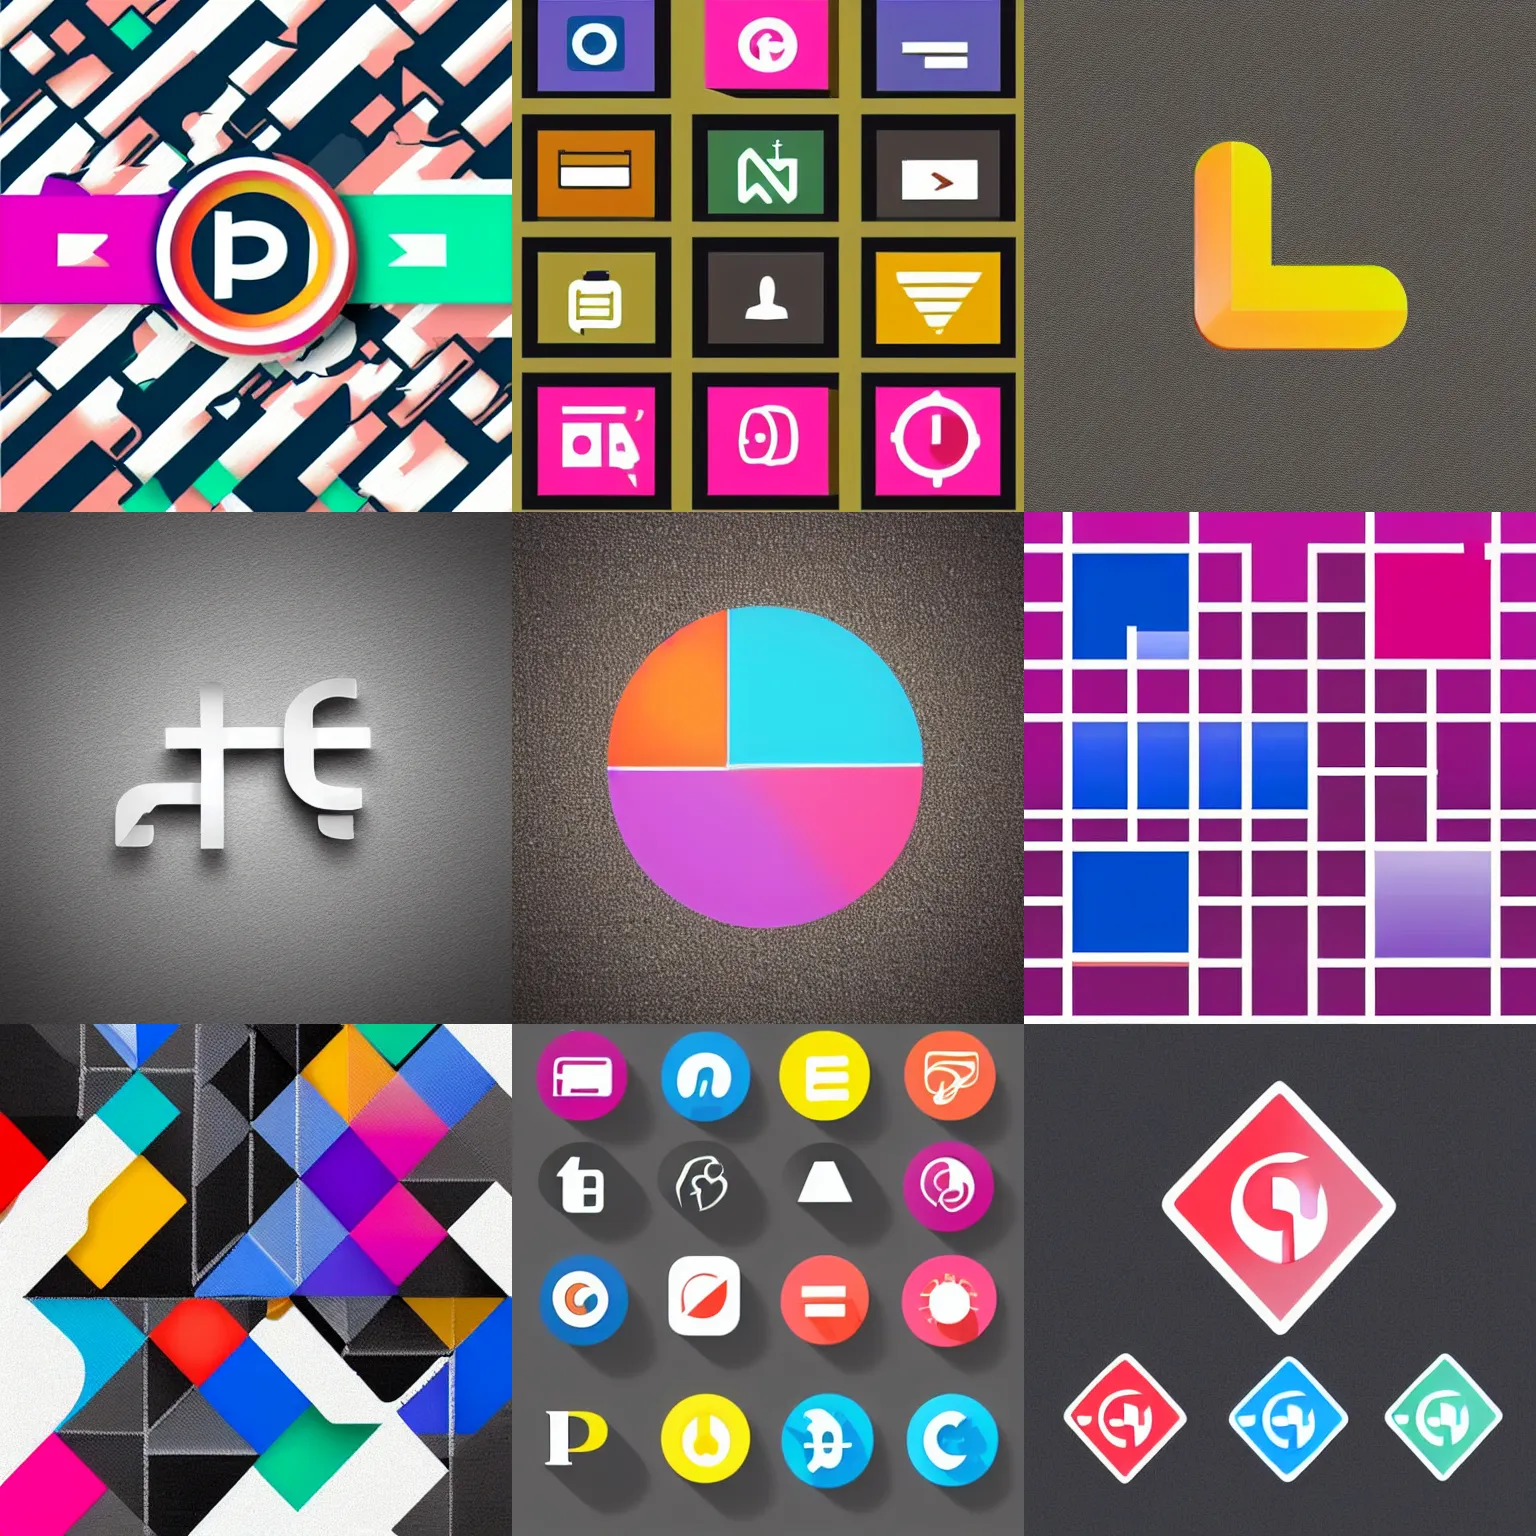 Prompt: A logo icon, digital marketing, minimalistic, vibrant, colorful, trending on pinterest